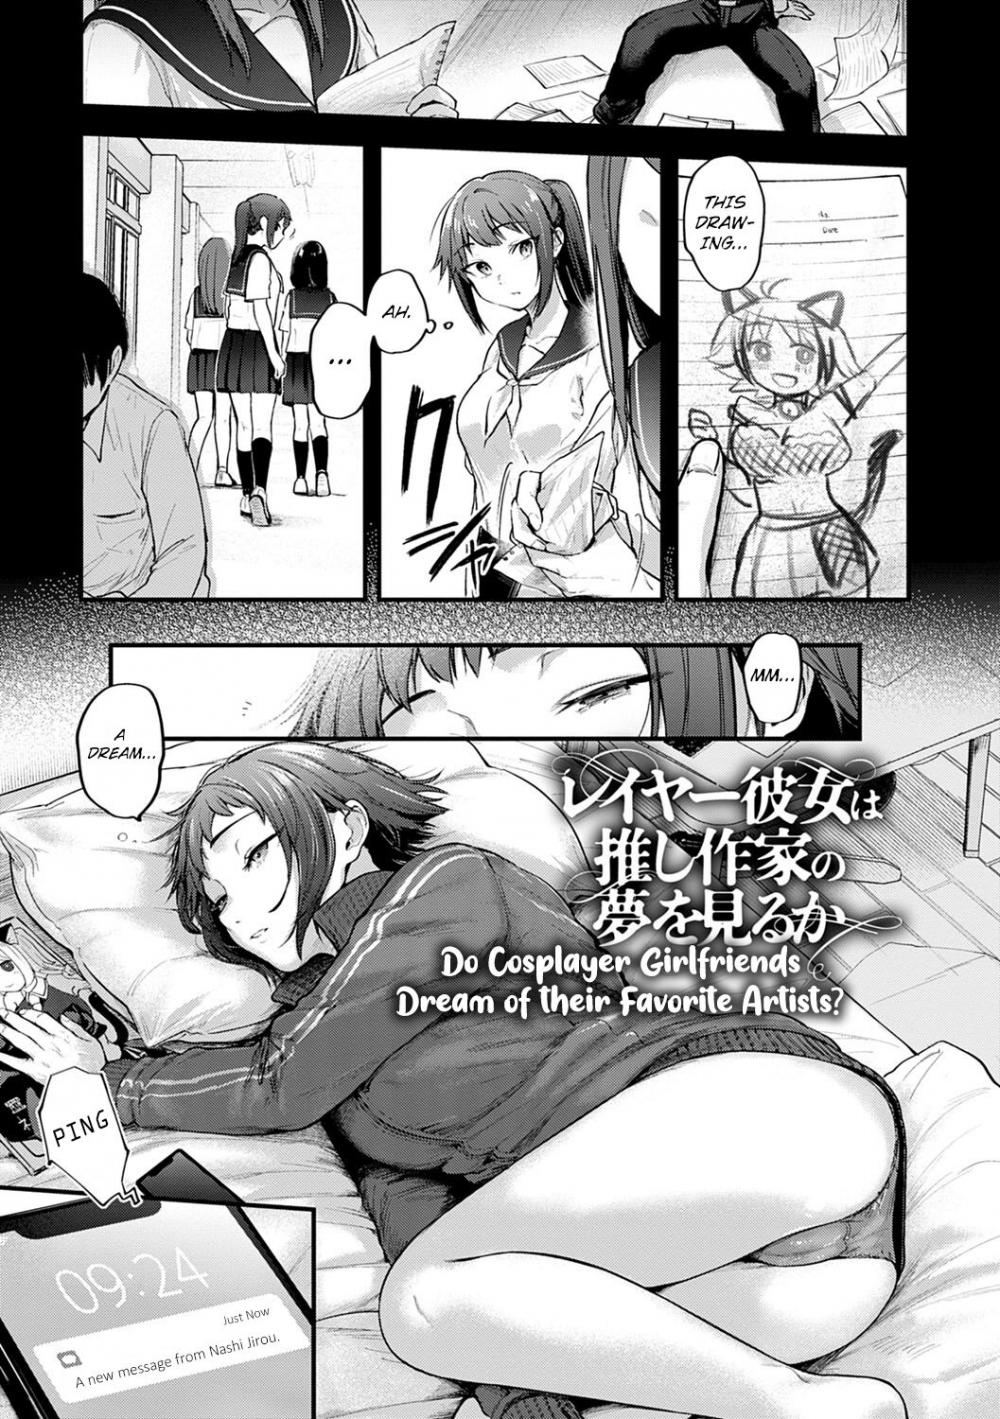 Hentai Manga Comic-Do Cosplayer Girlfriends Dream of Their Favorite Artists?-Read-1